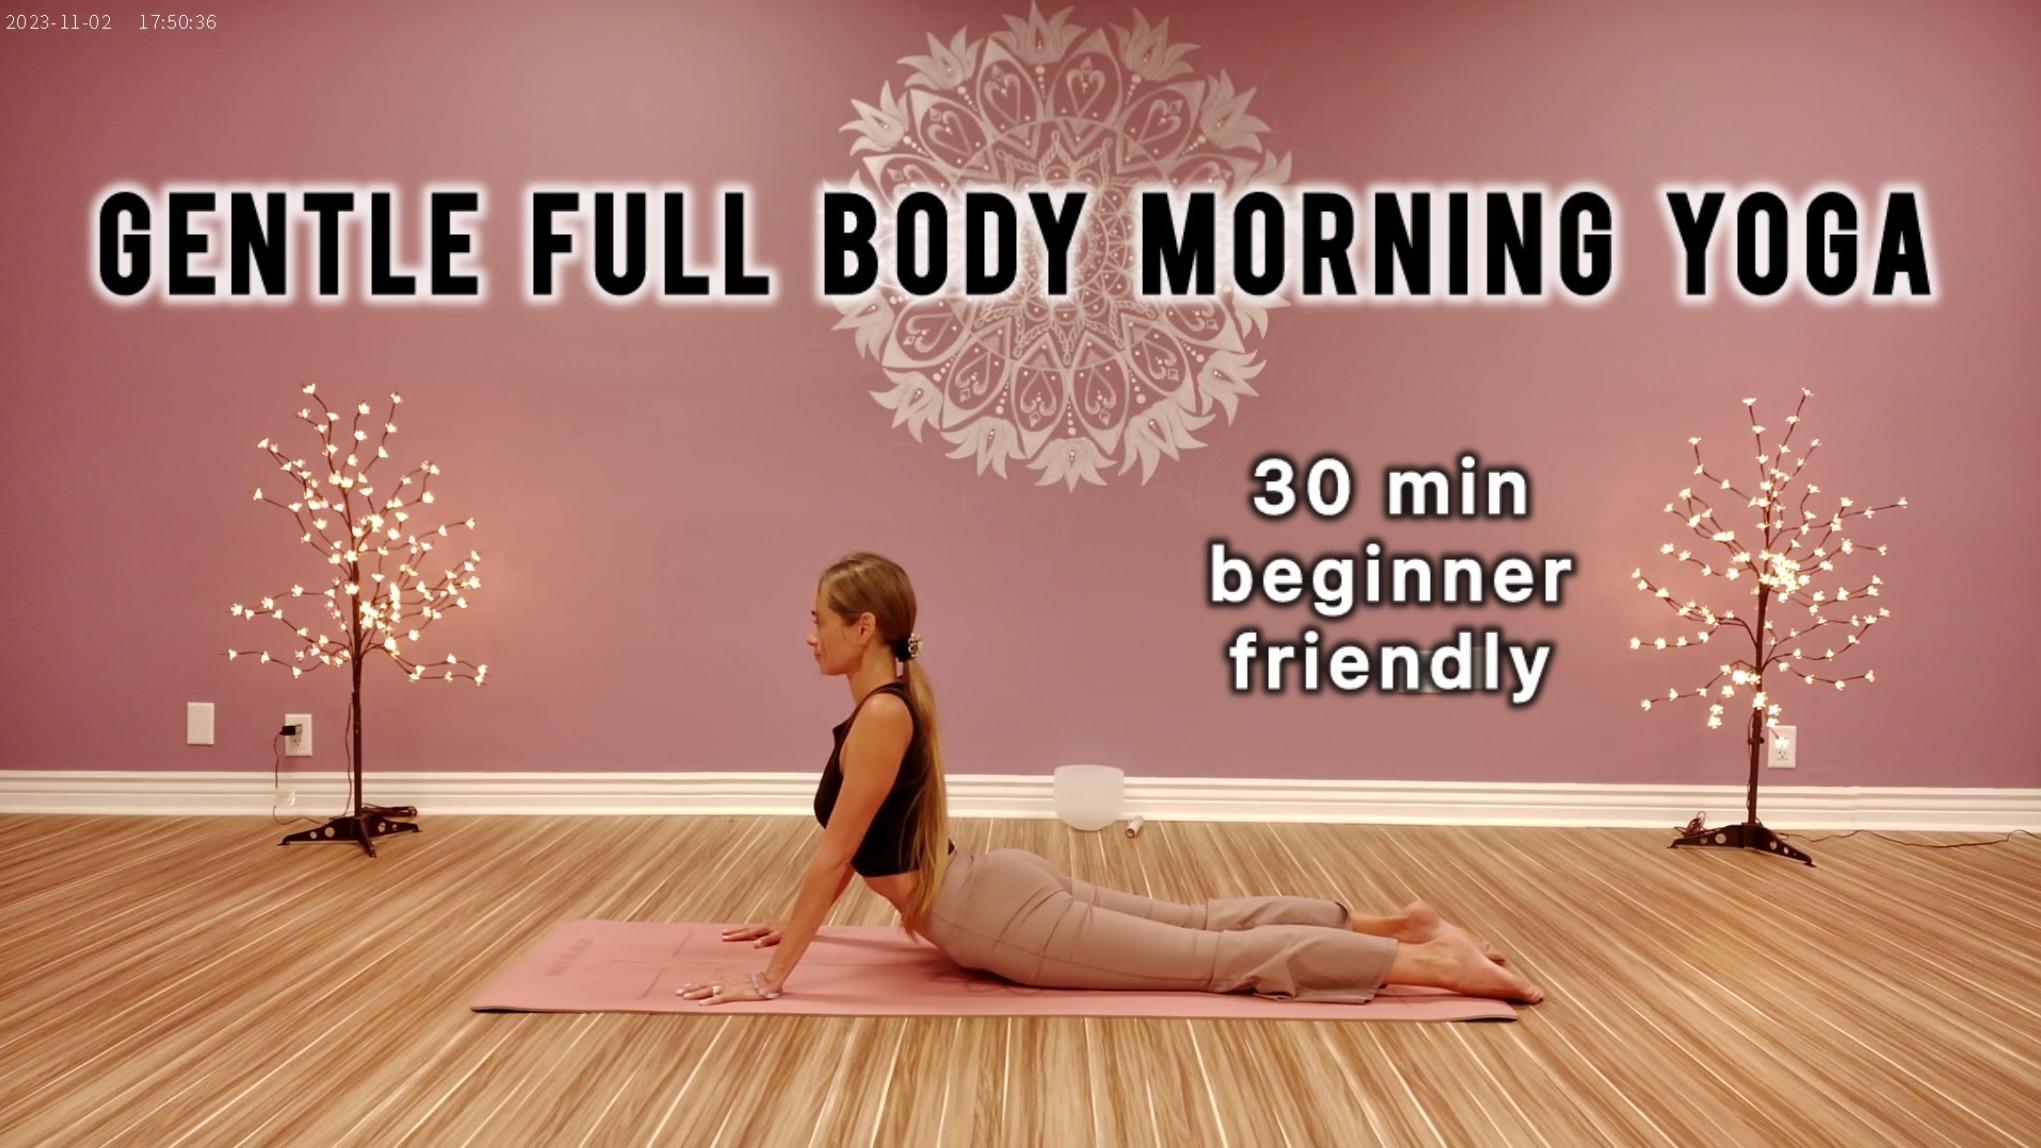 Gentle full body morning yoga